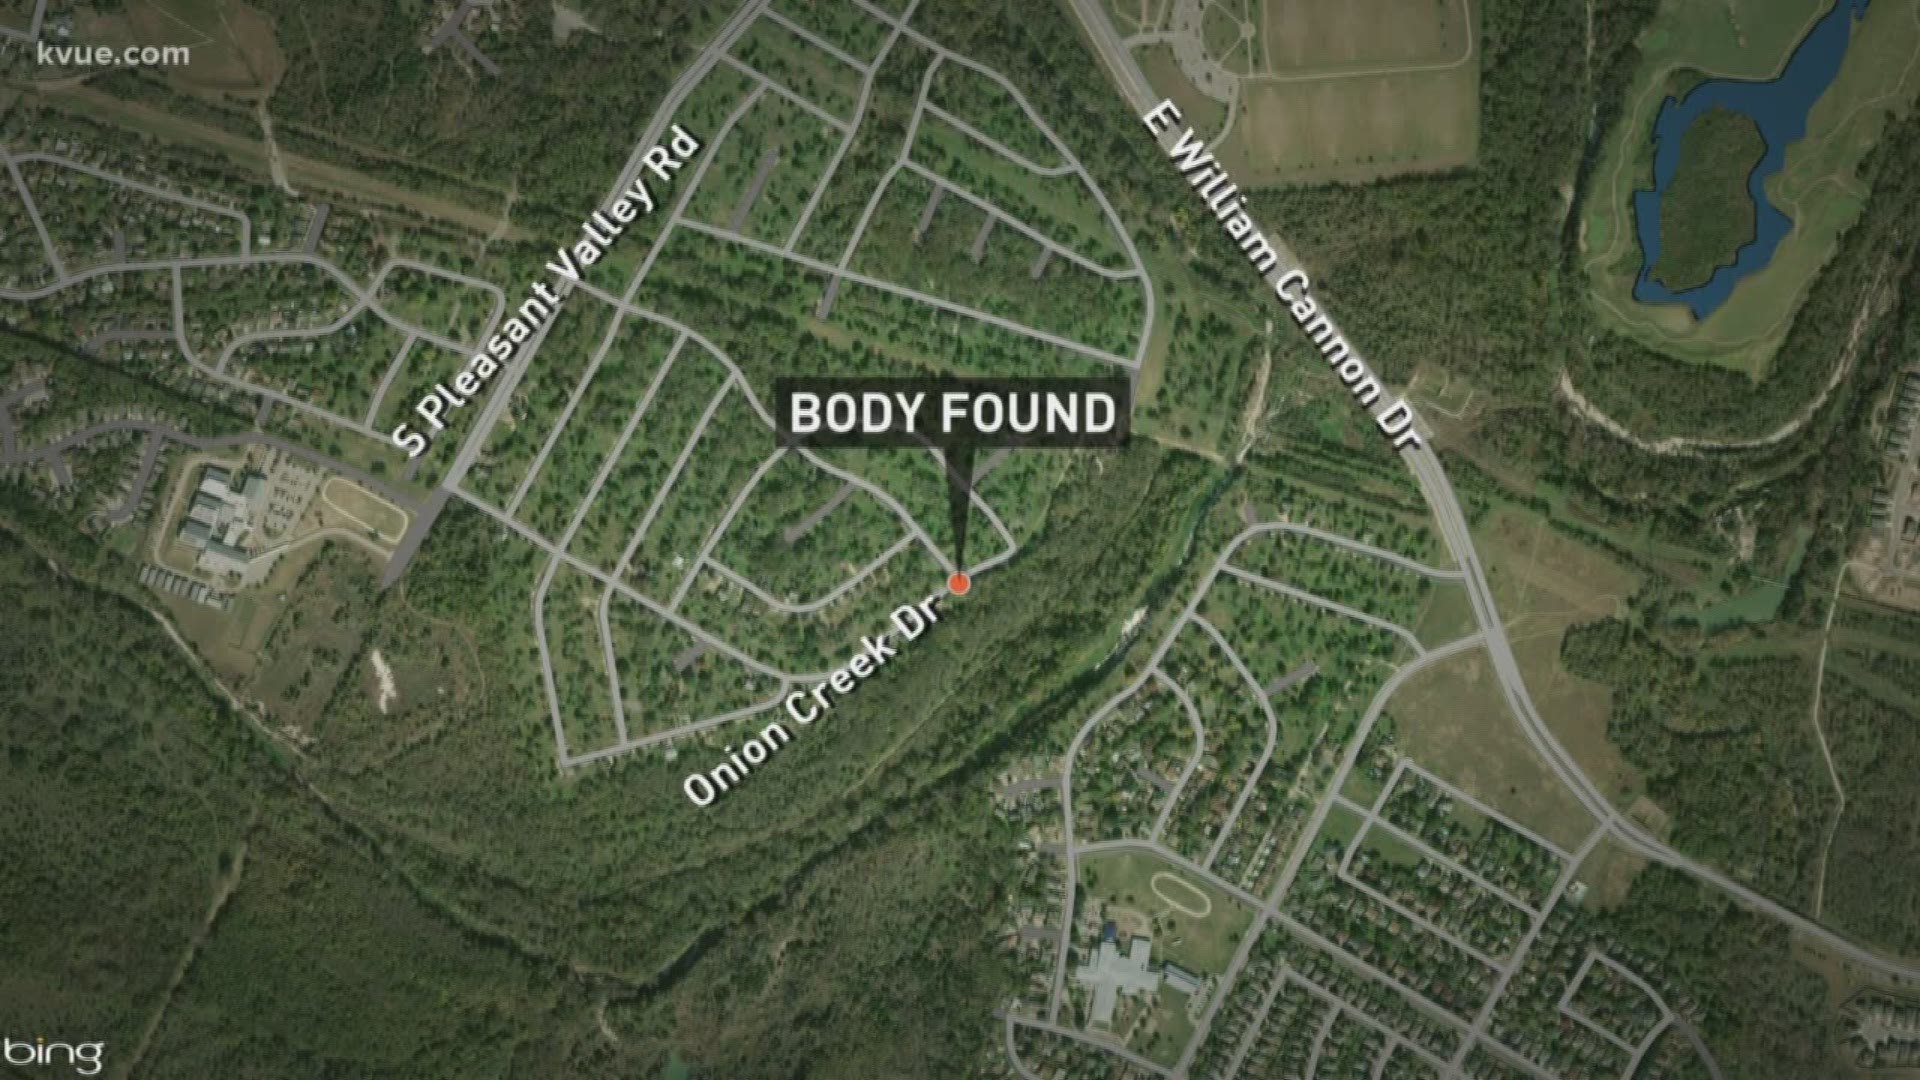 A body found near Onion Creak Greenbelt is that of a homicide victim.